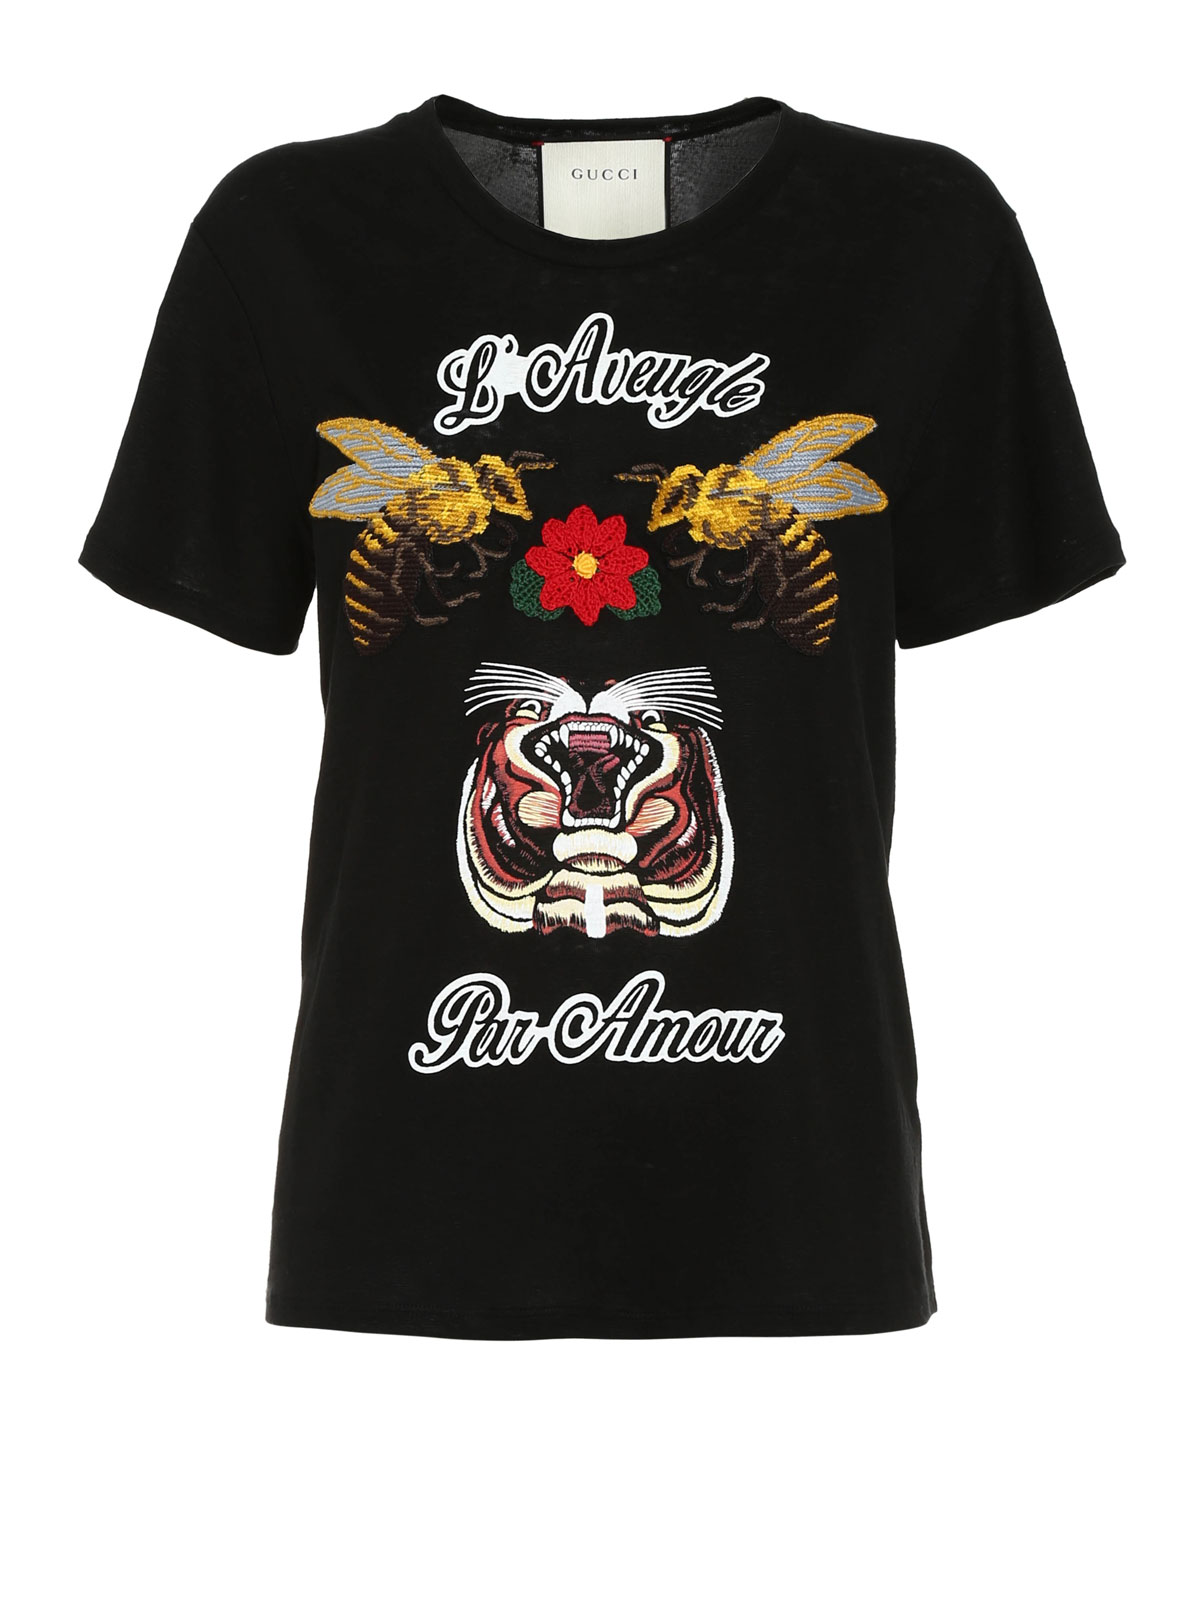 Roblox Gucci Bag T Shirts Mount Mercy University - Roblox Codes Clothes Shirts And Pants